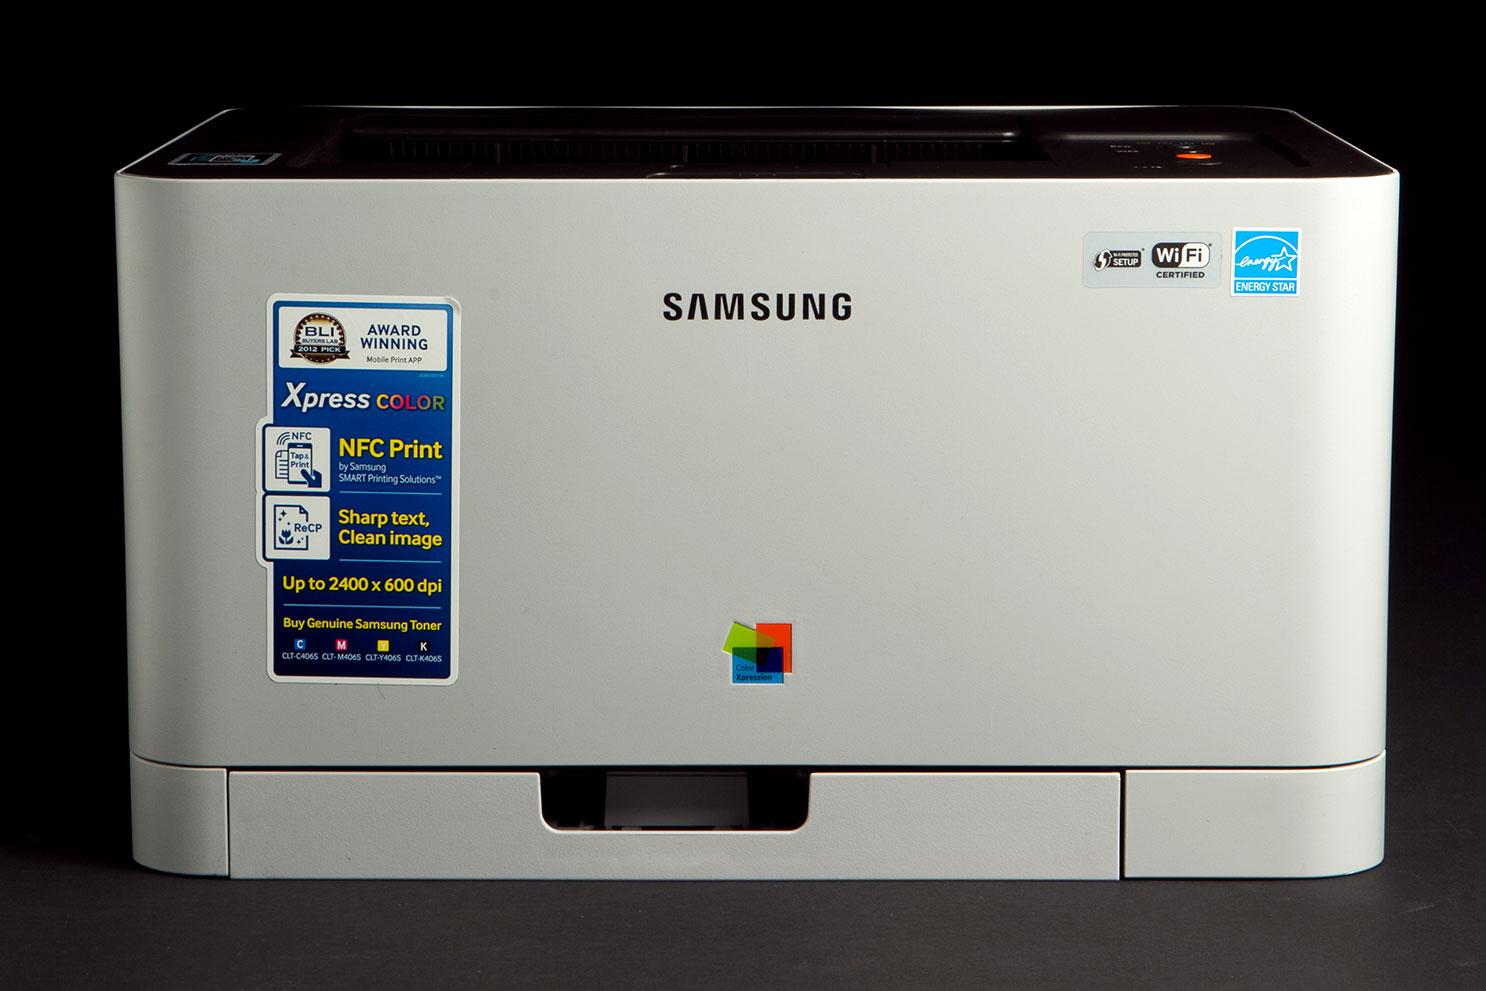 Zenuwinzinking condensor Anoi Samsung Printer Xpress C410W review | Digital Trends